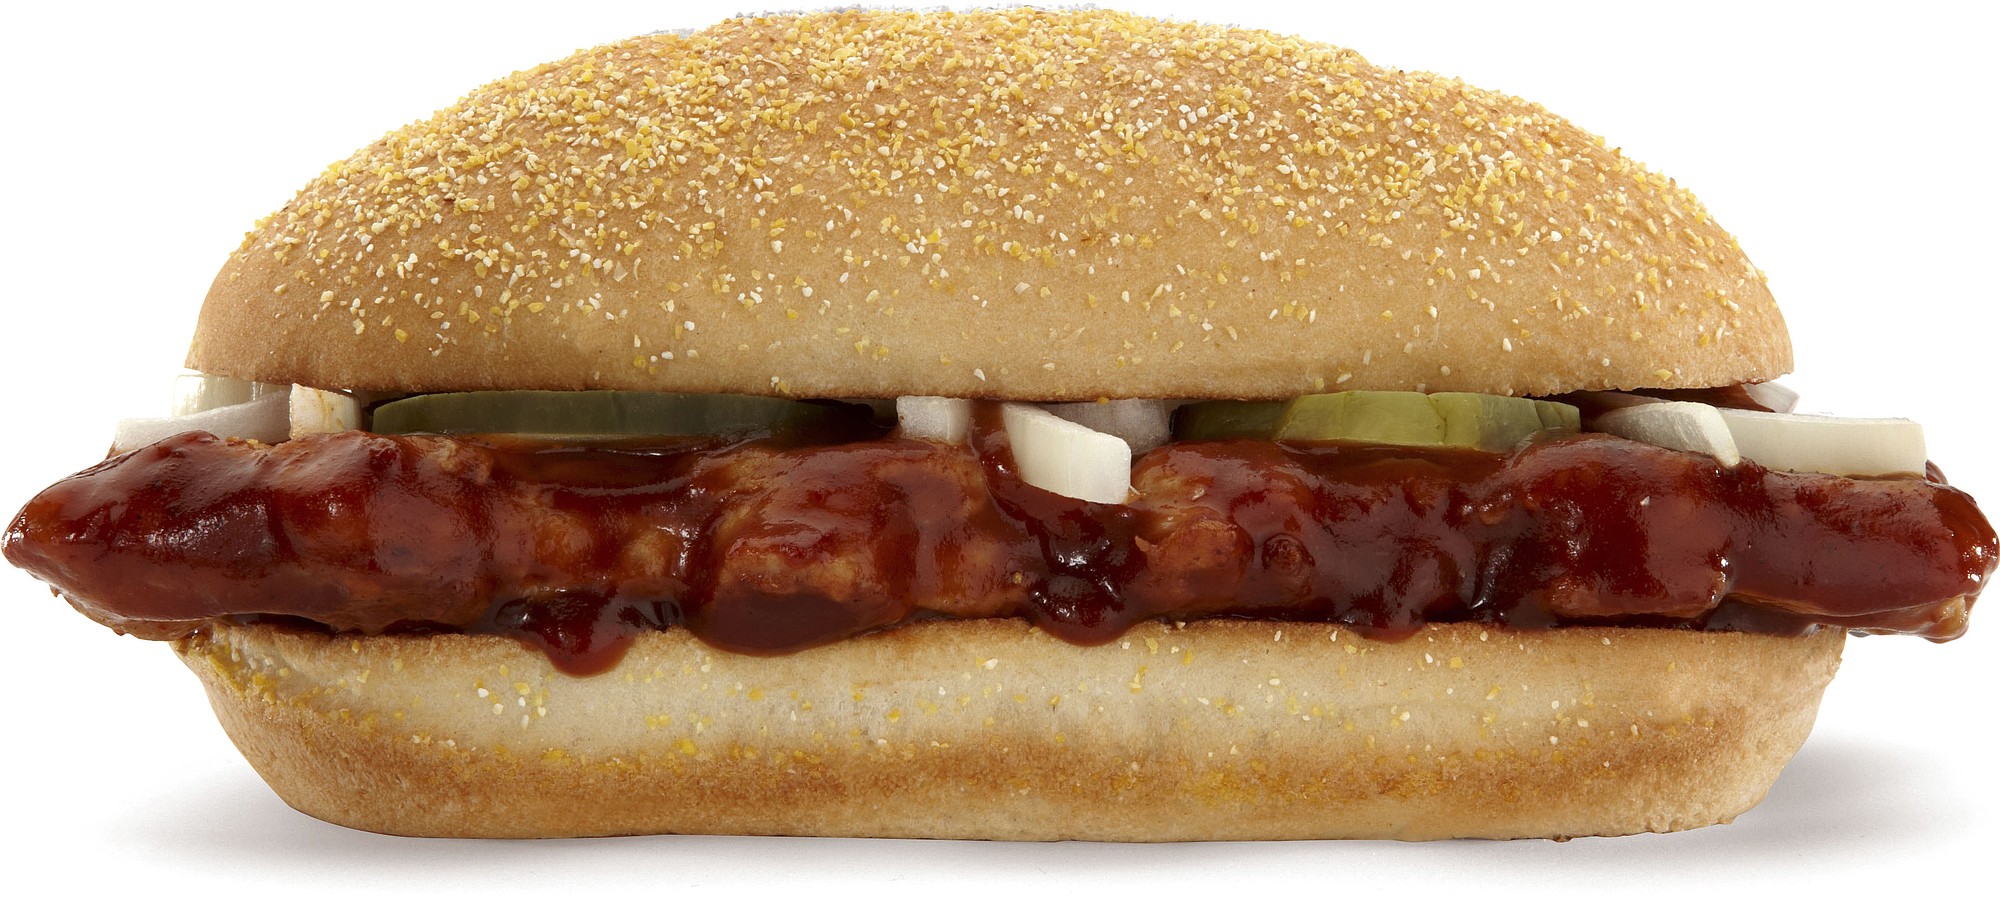 McDonald's
McRib sandwich